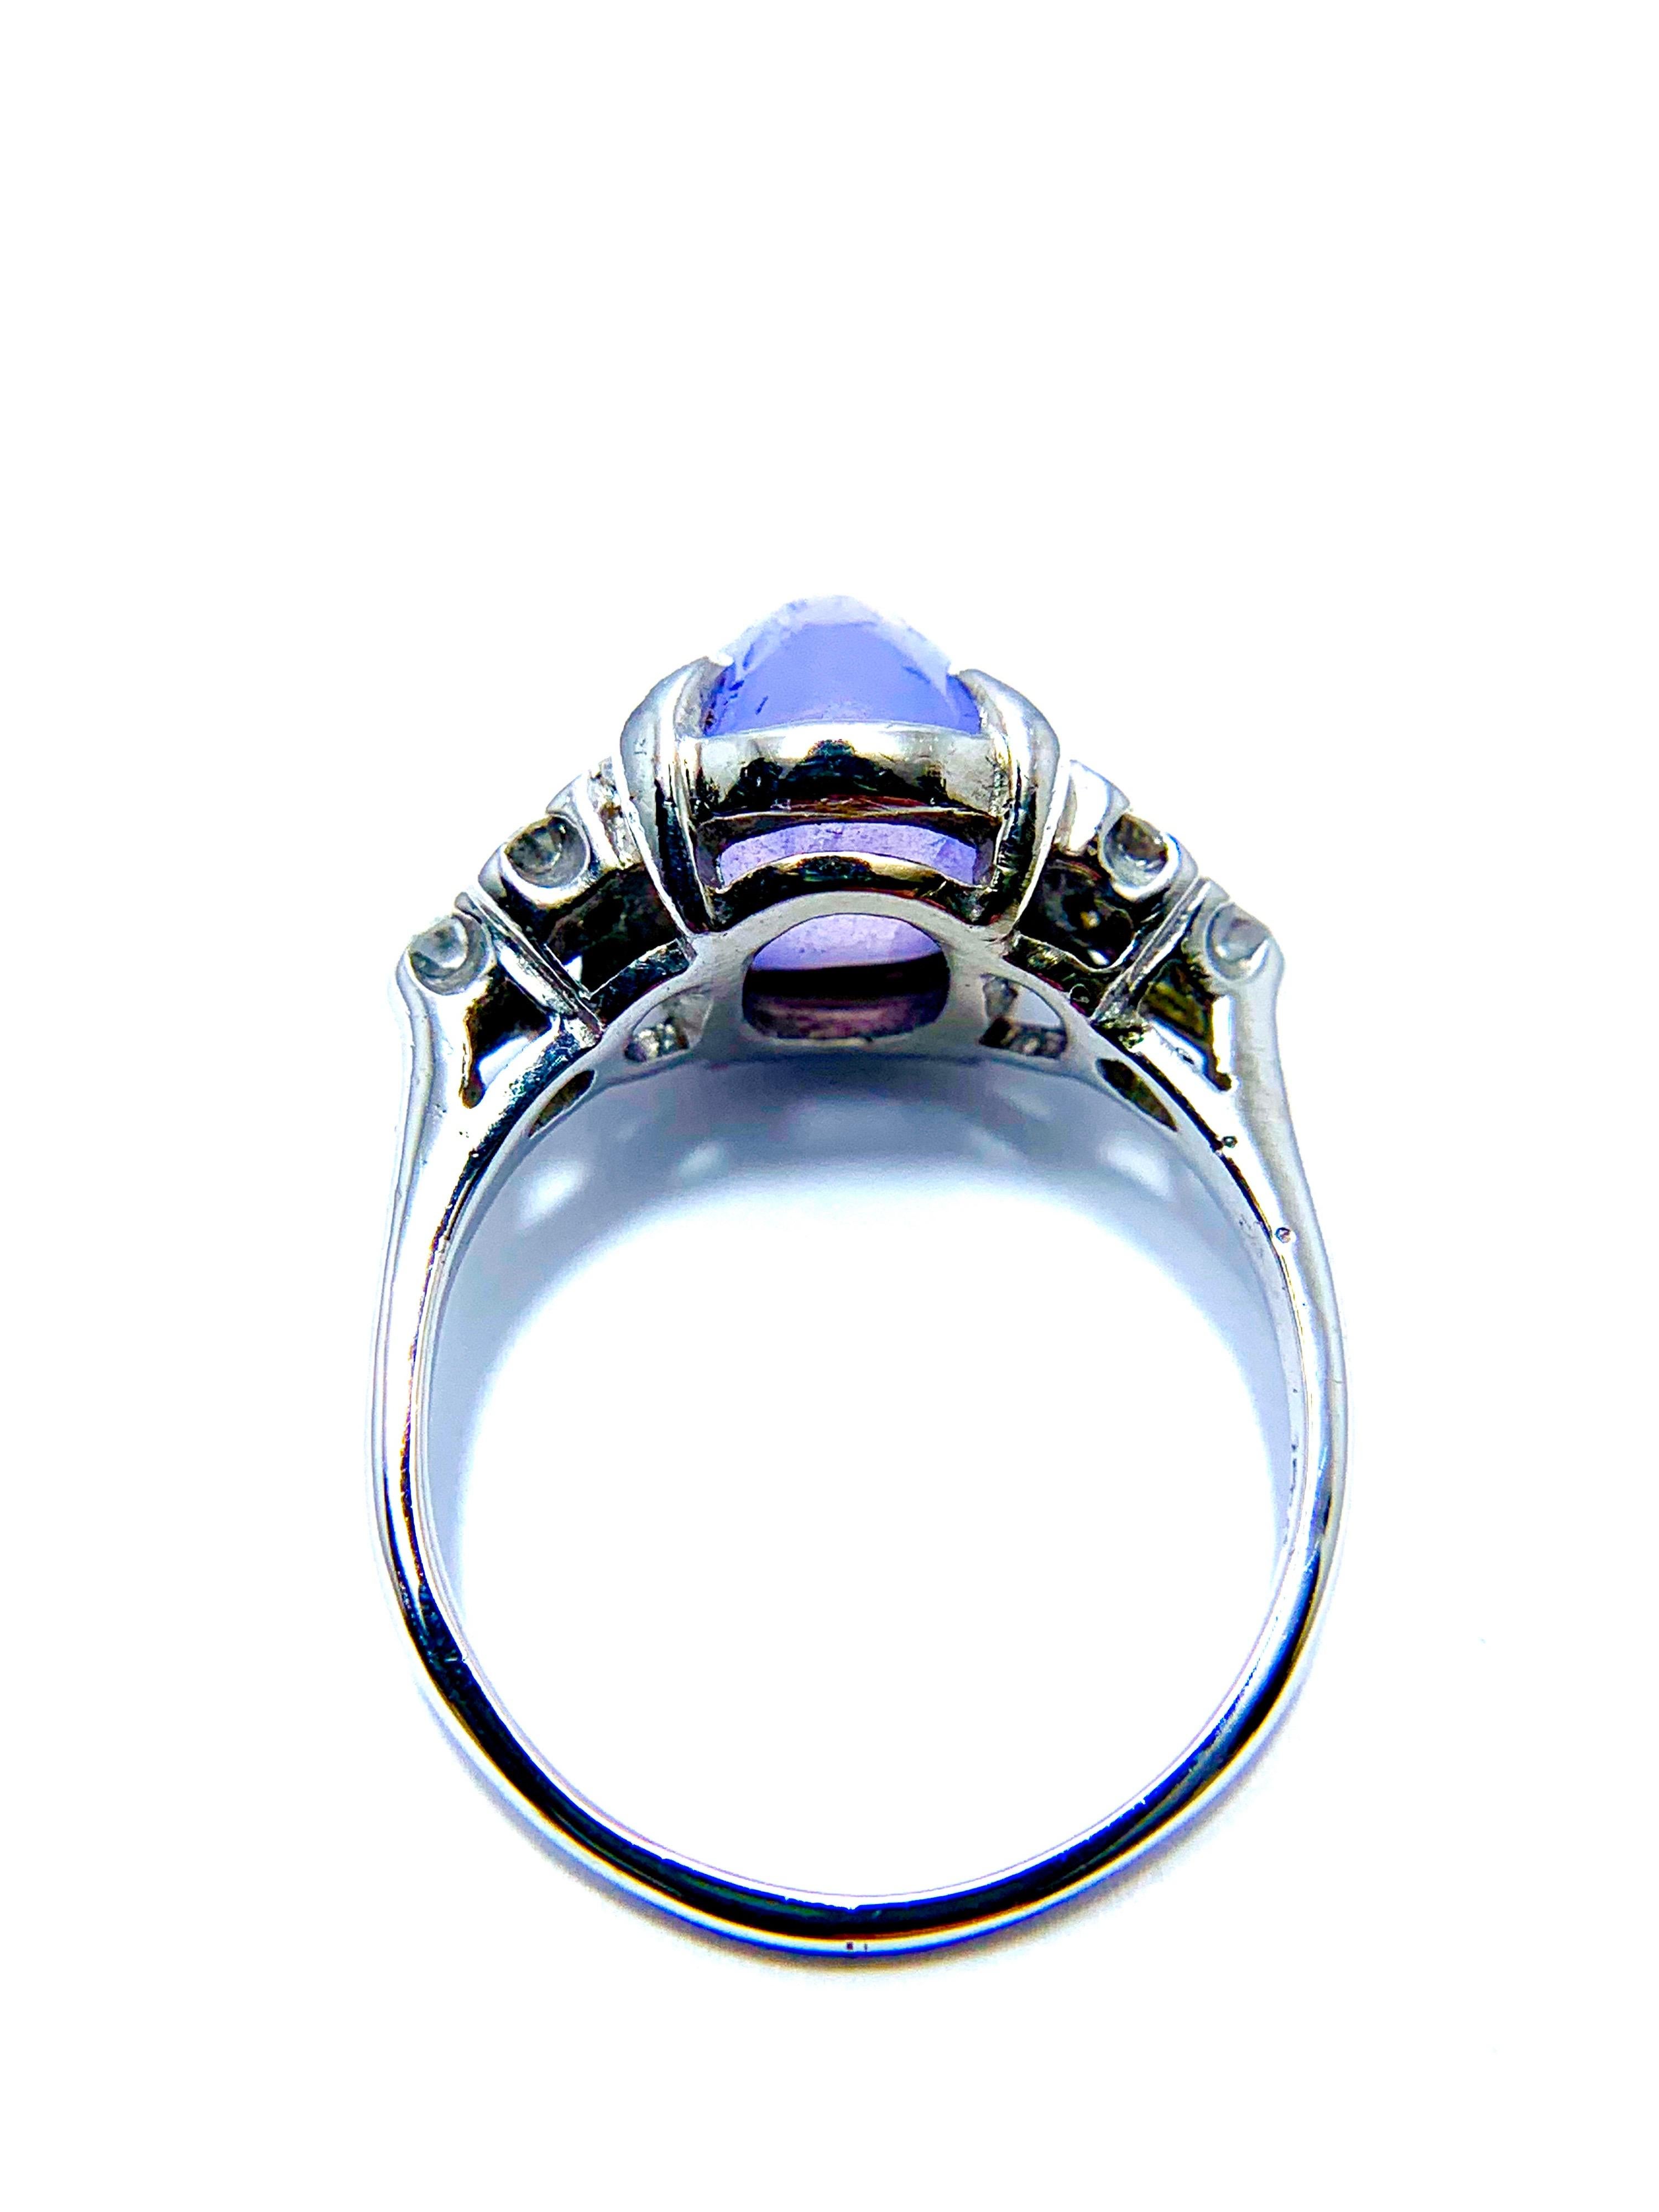 Women's or Men's 5.36 Carat Lavander Cabochon Sapphire and Diamond Cocktail Ring